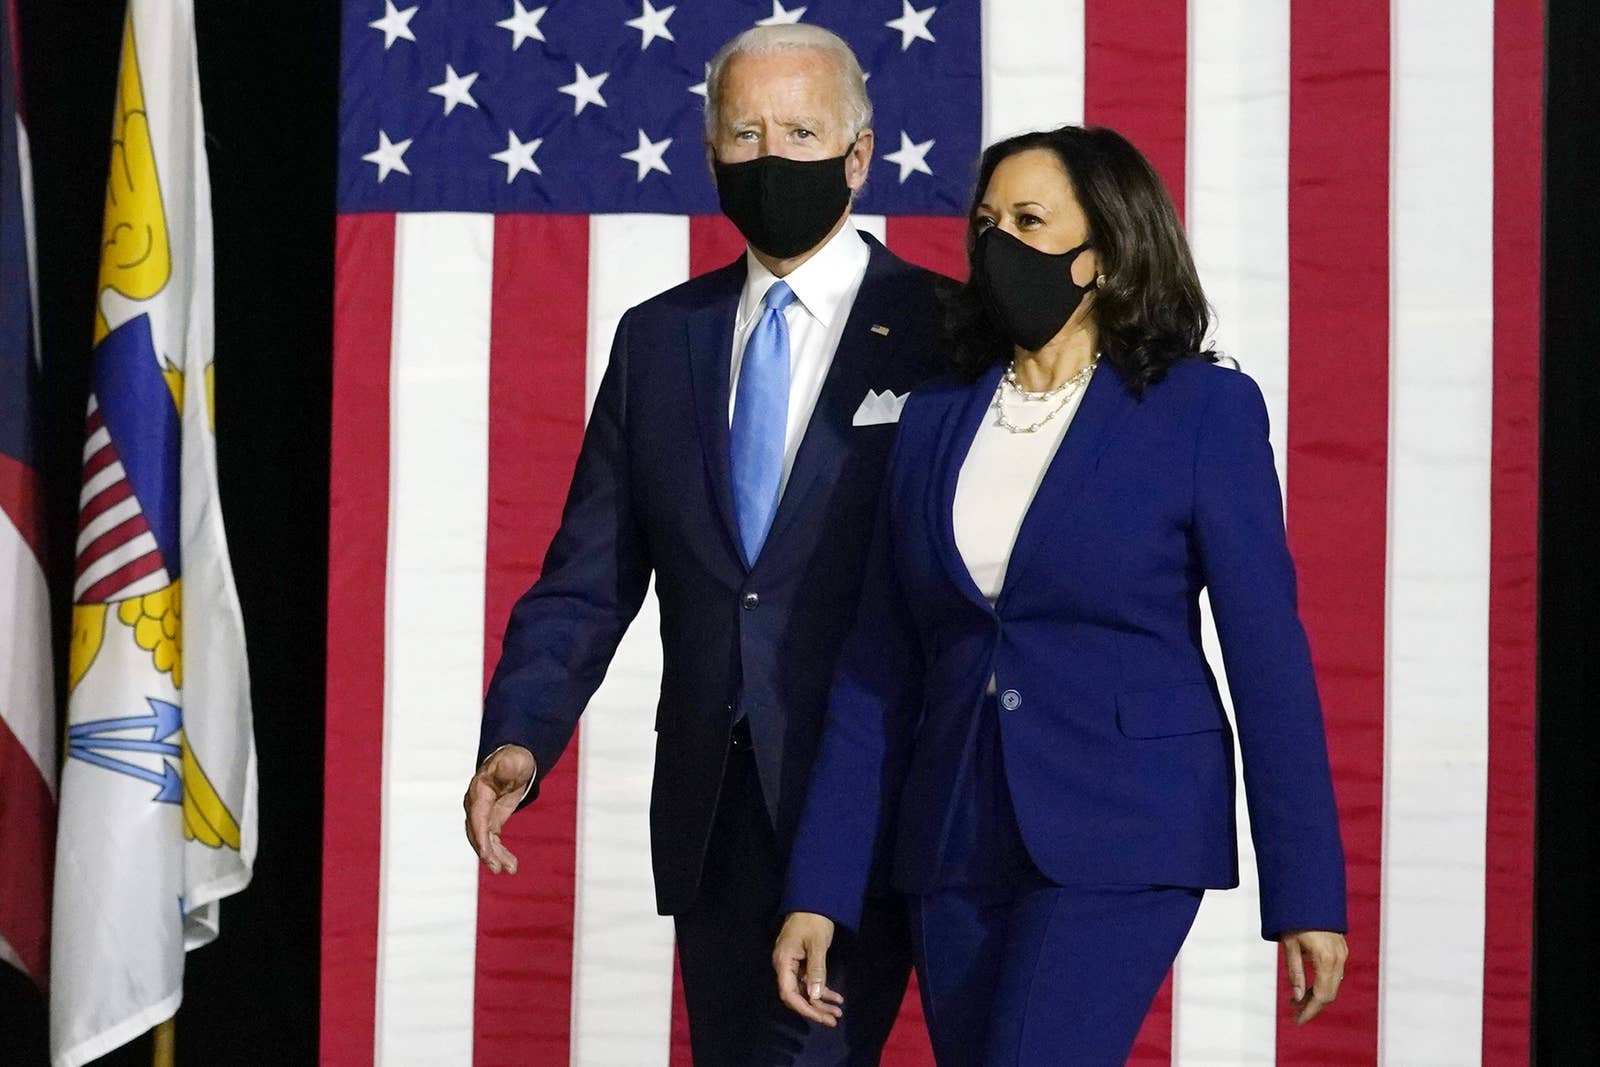 Joe Biden and Kamala Harris in front of the American Flag